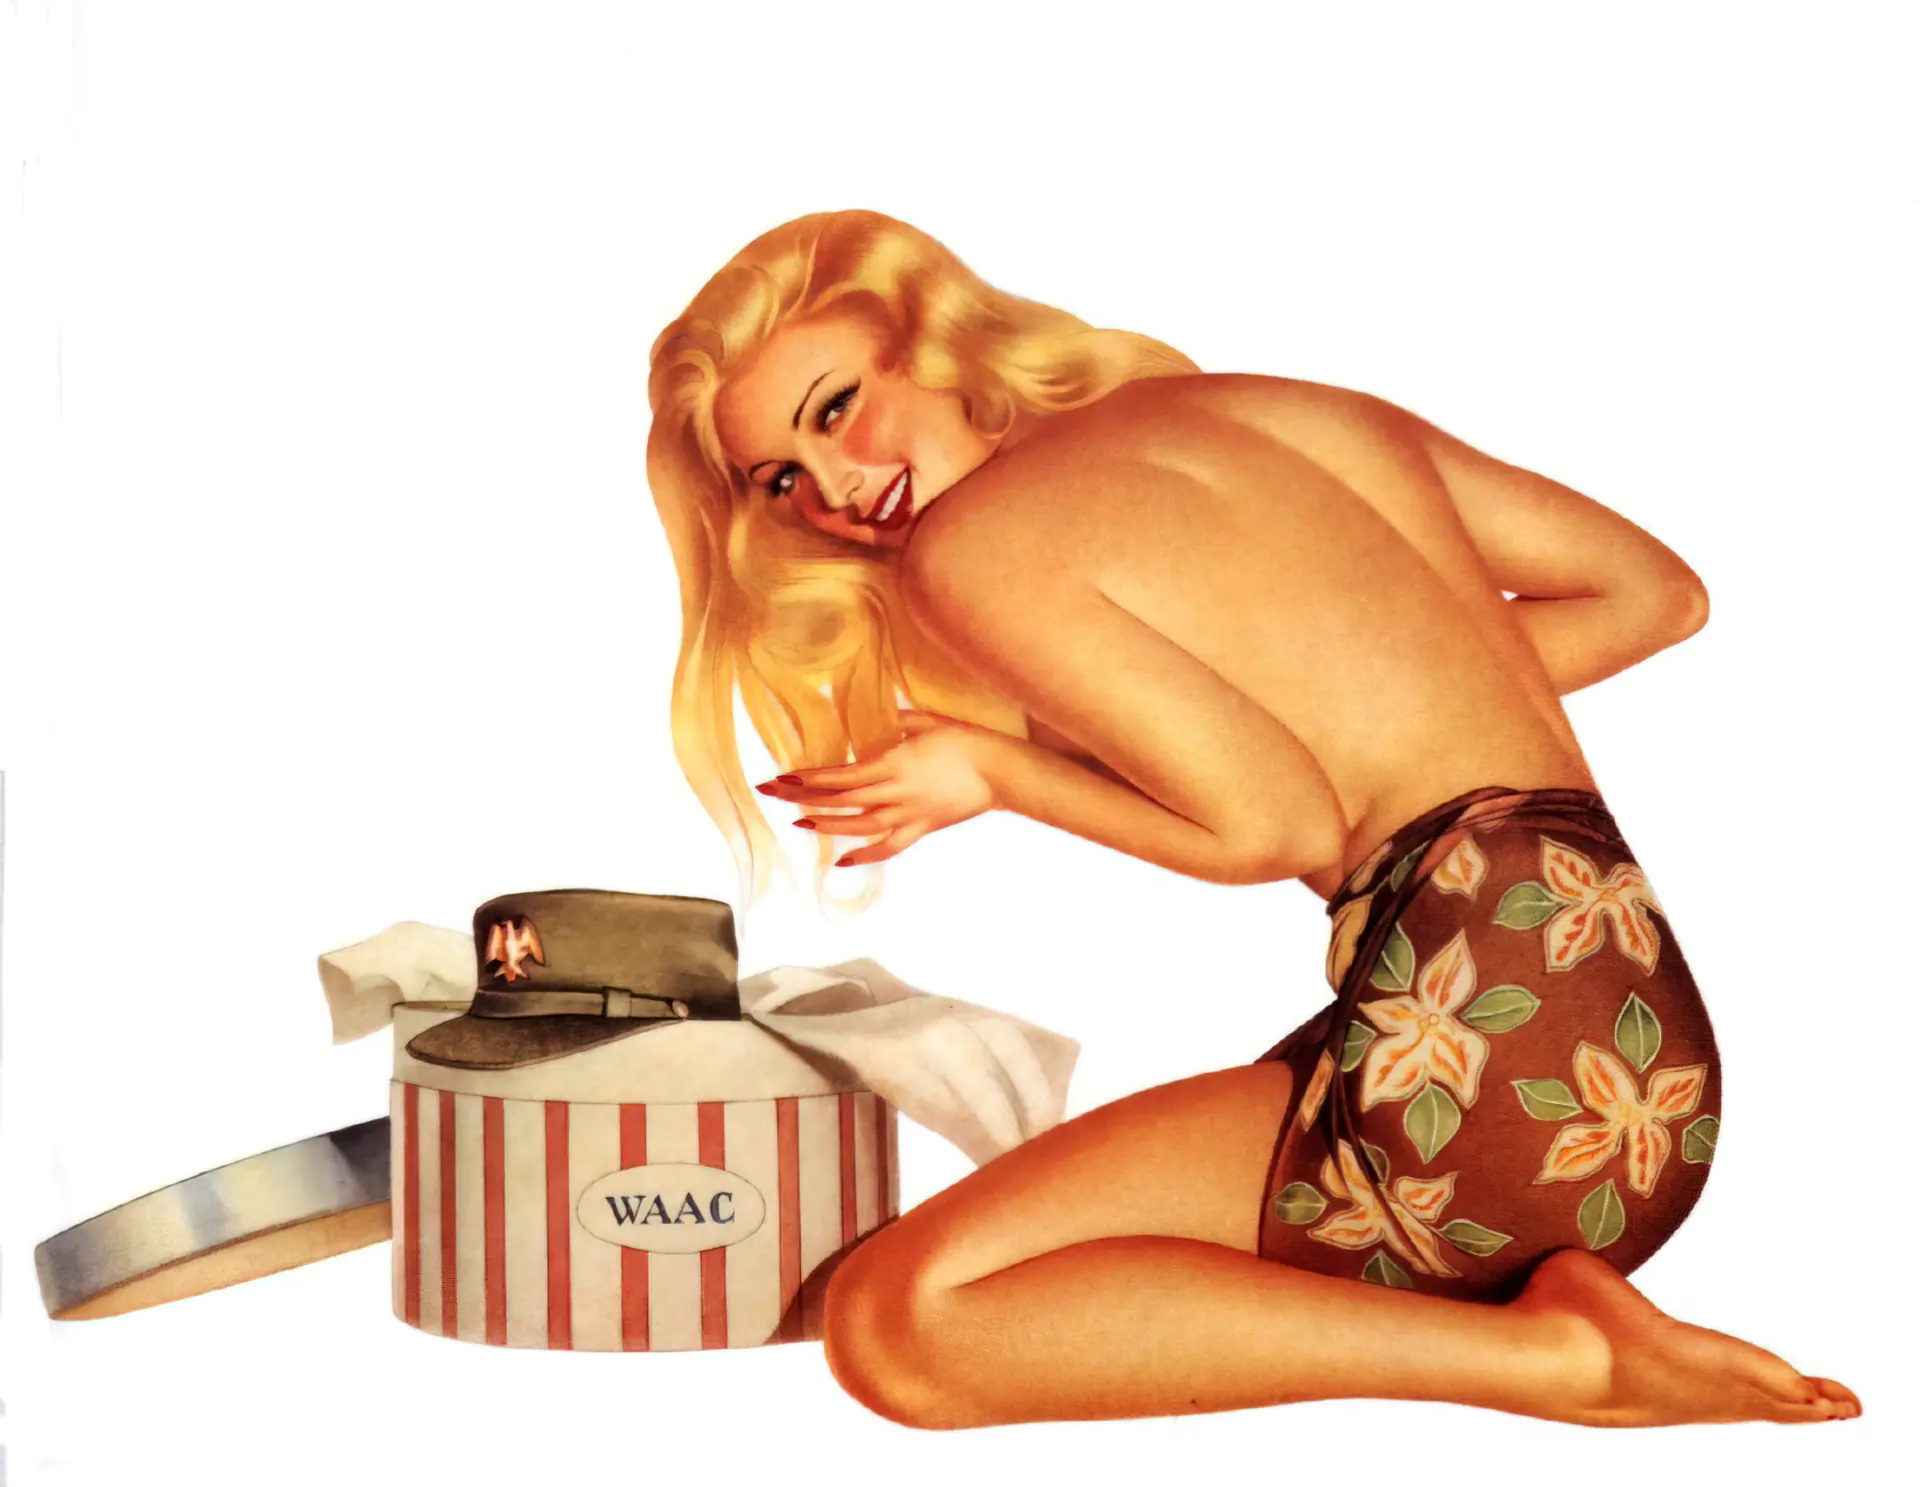 40s Porn Clip Art - Vintage Art Porn Pics: Free Classic Nudes â€” Vintage Cuties